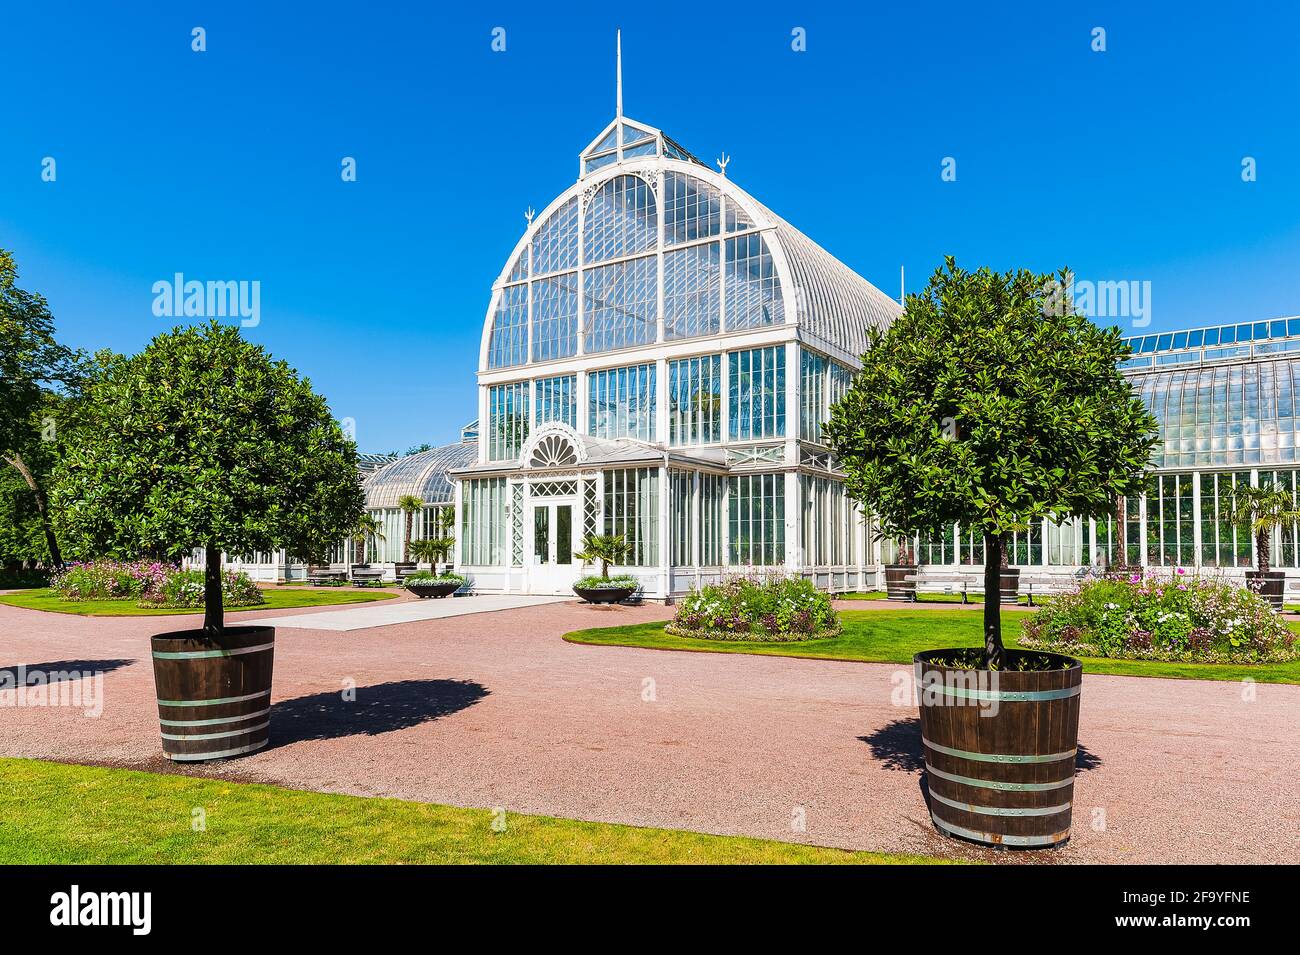 Facade of popular greenhouse, Sweden Stock Photo